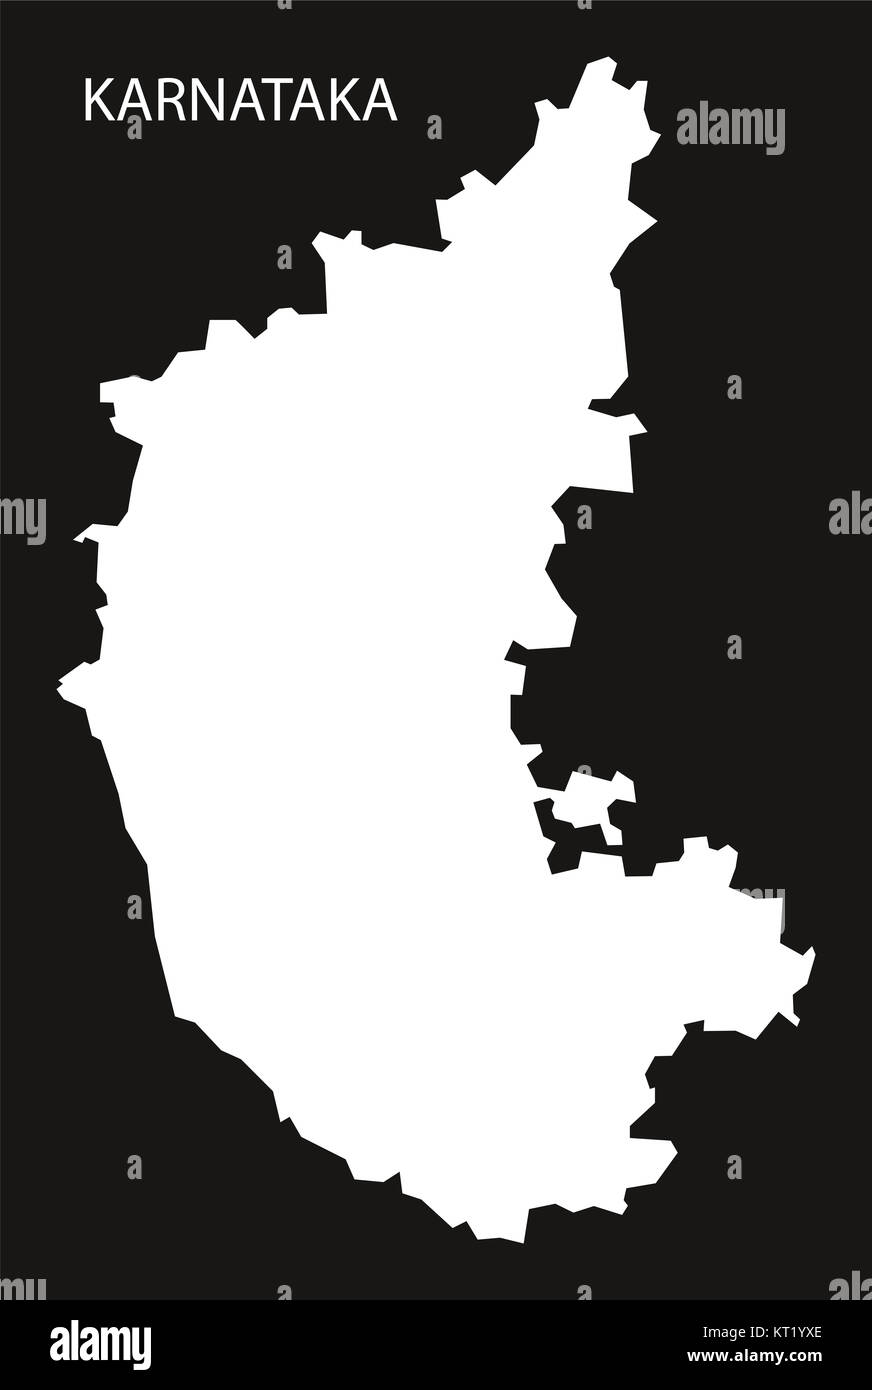 Karnataka India Map black inverted Stock Photo - Alamy